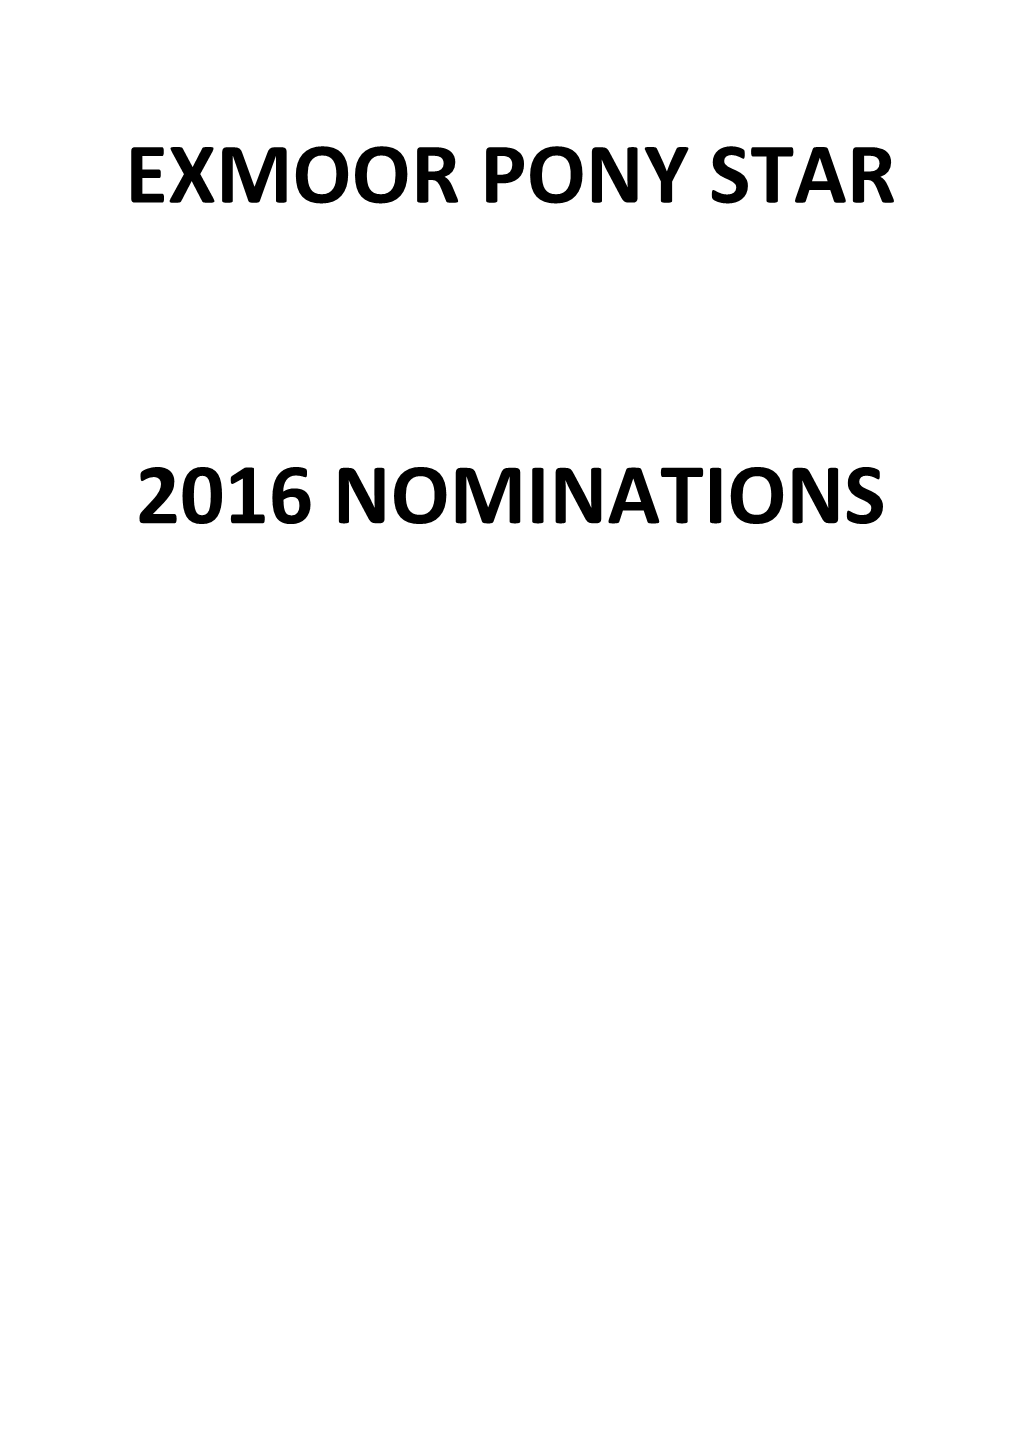 Exmoor Pony Star 2016 Nominations